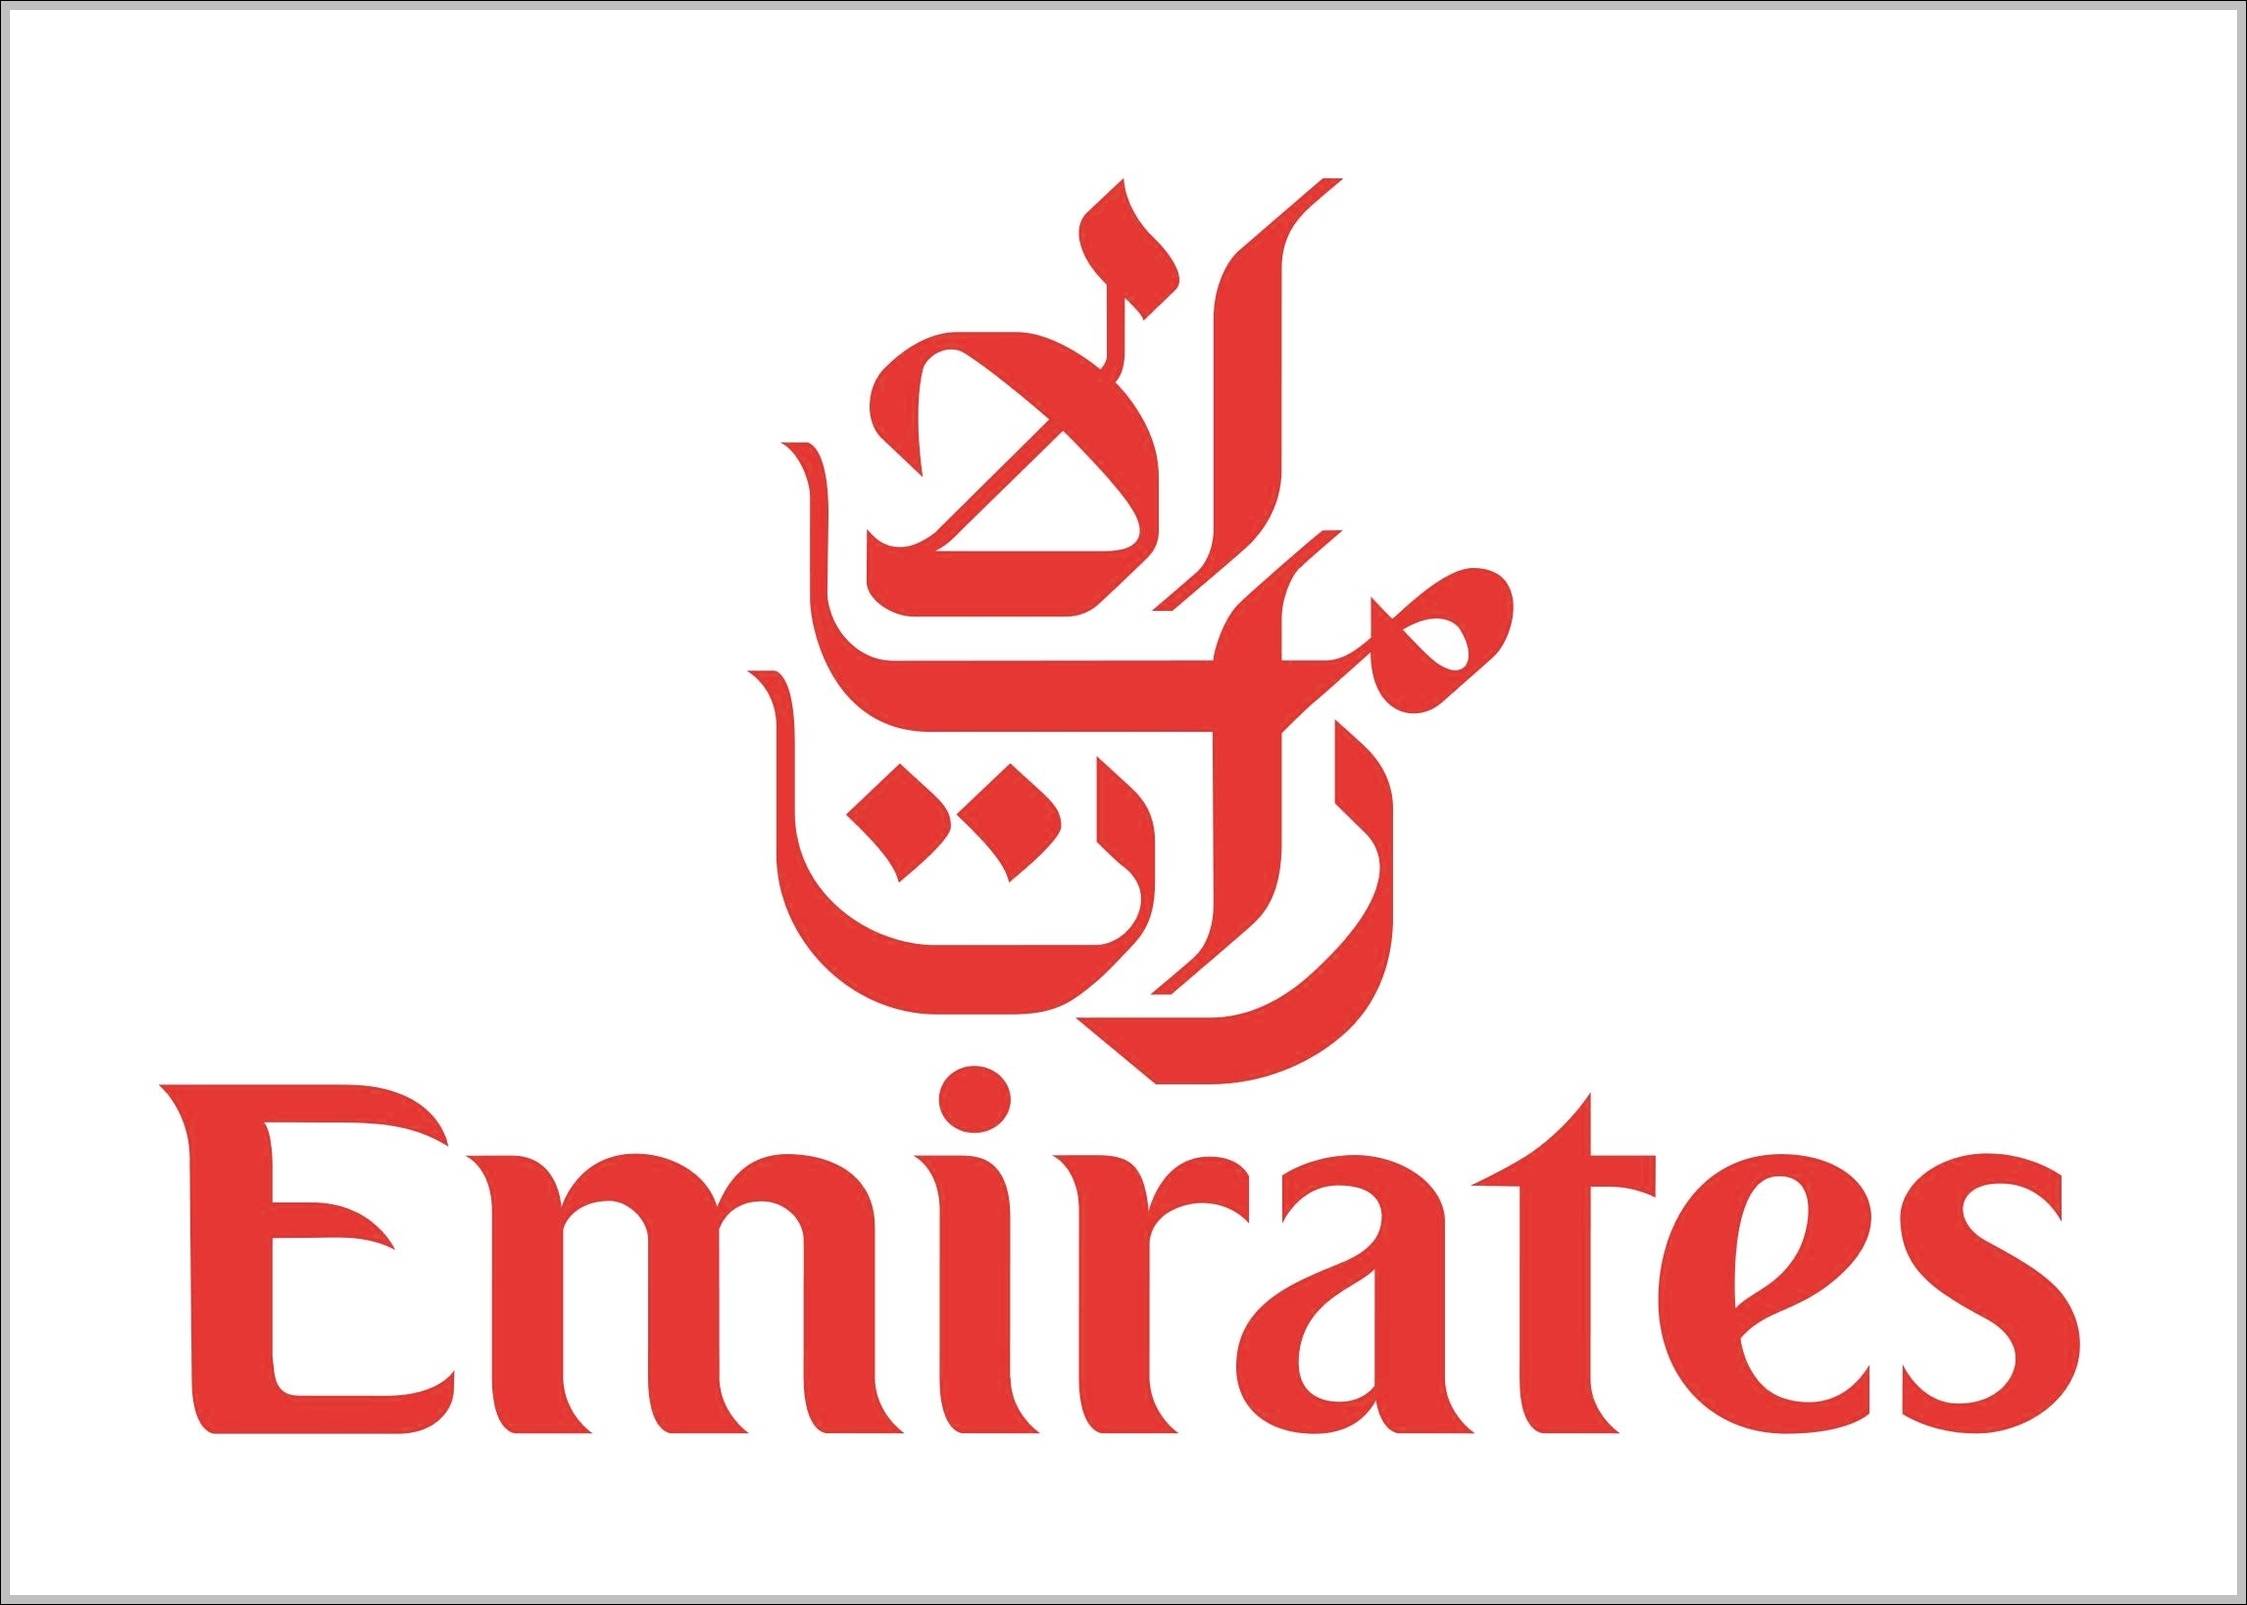 Emirates logo and sign